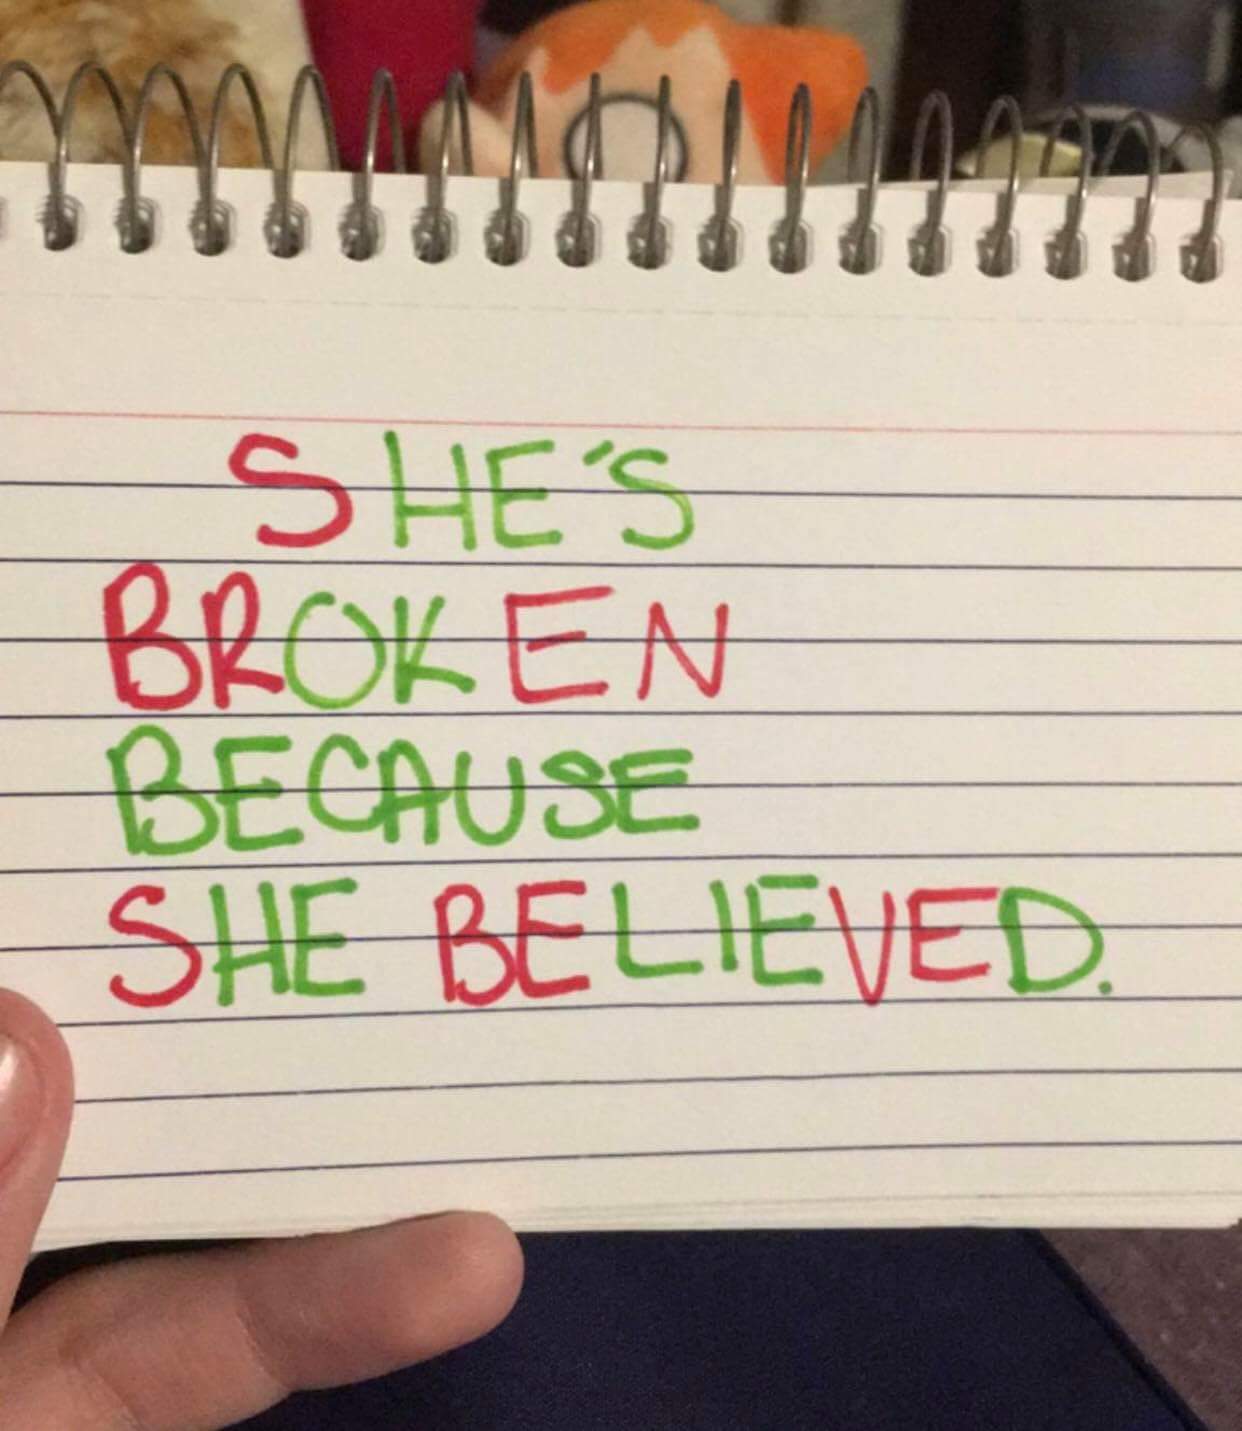 sbren sbeve - She'S Broken Because She Believed.